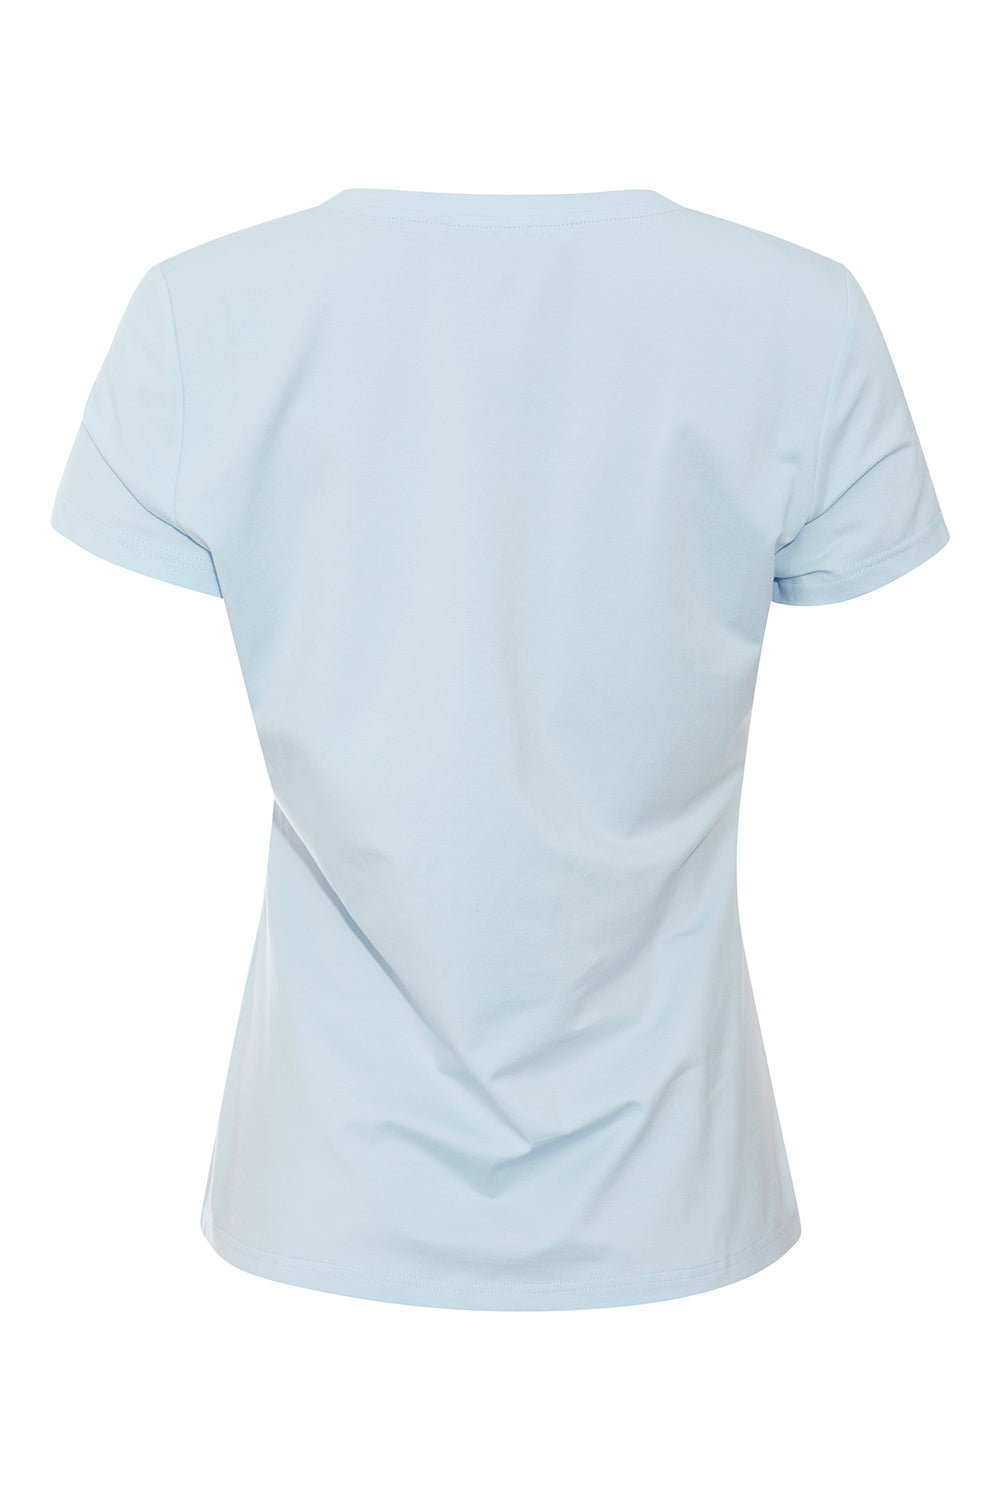 PBO Phio T-shirt T-SHIRTS 213 Sky blue